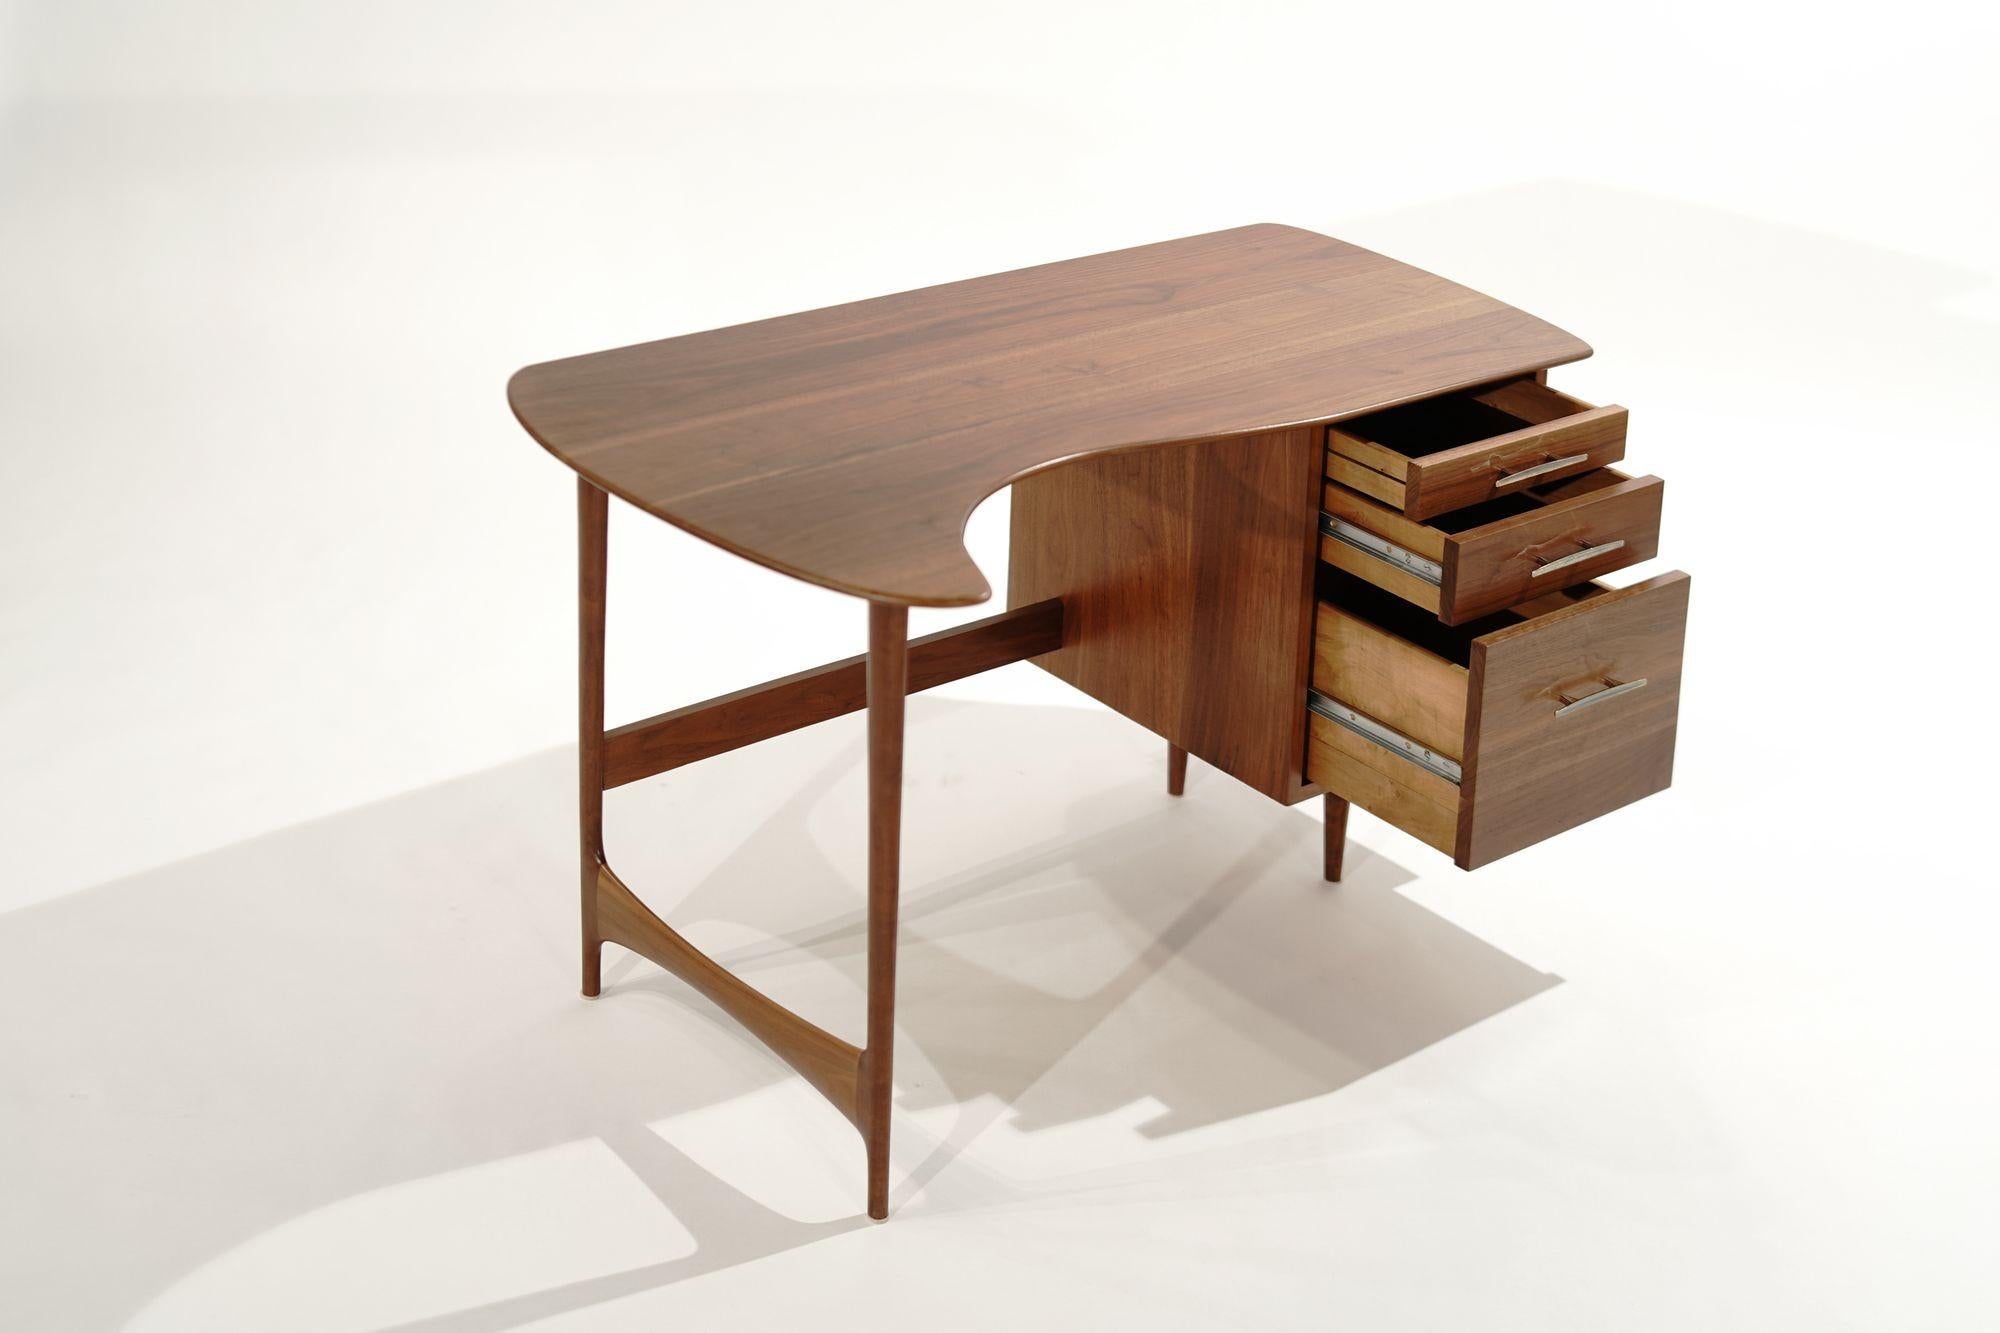 20th Century Asymmetric Scandinavian-Modern Walnut Desk, C. 1950s